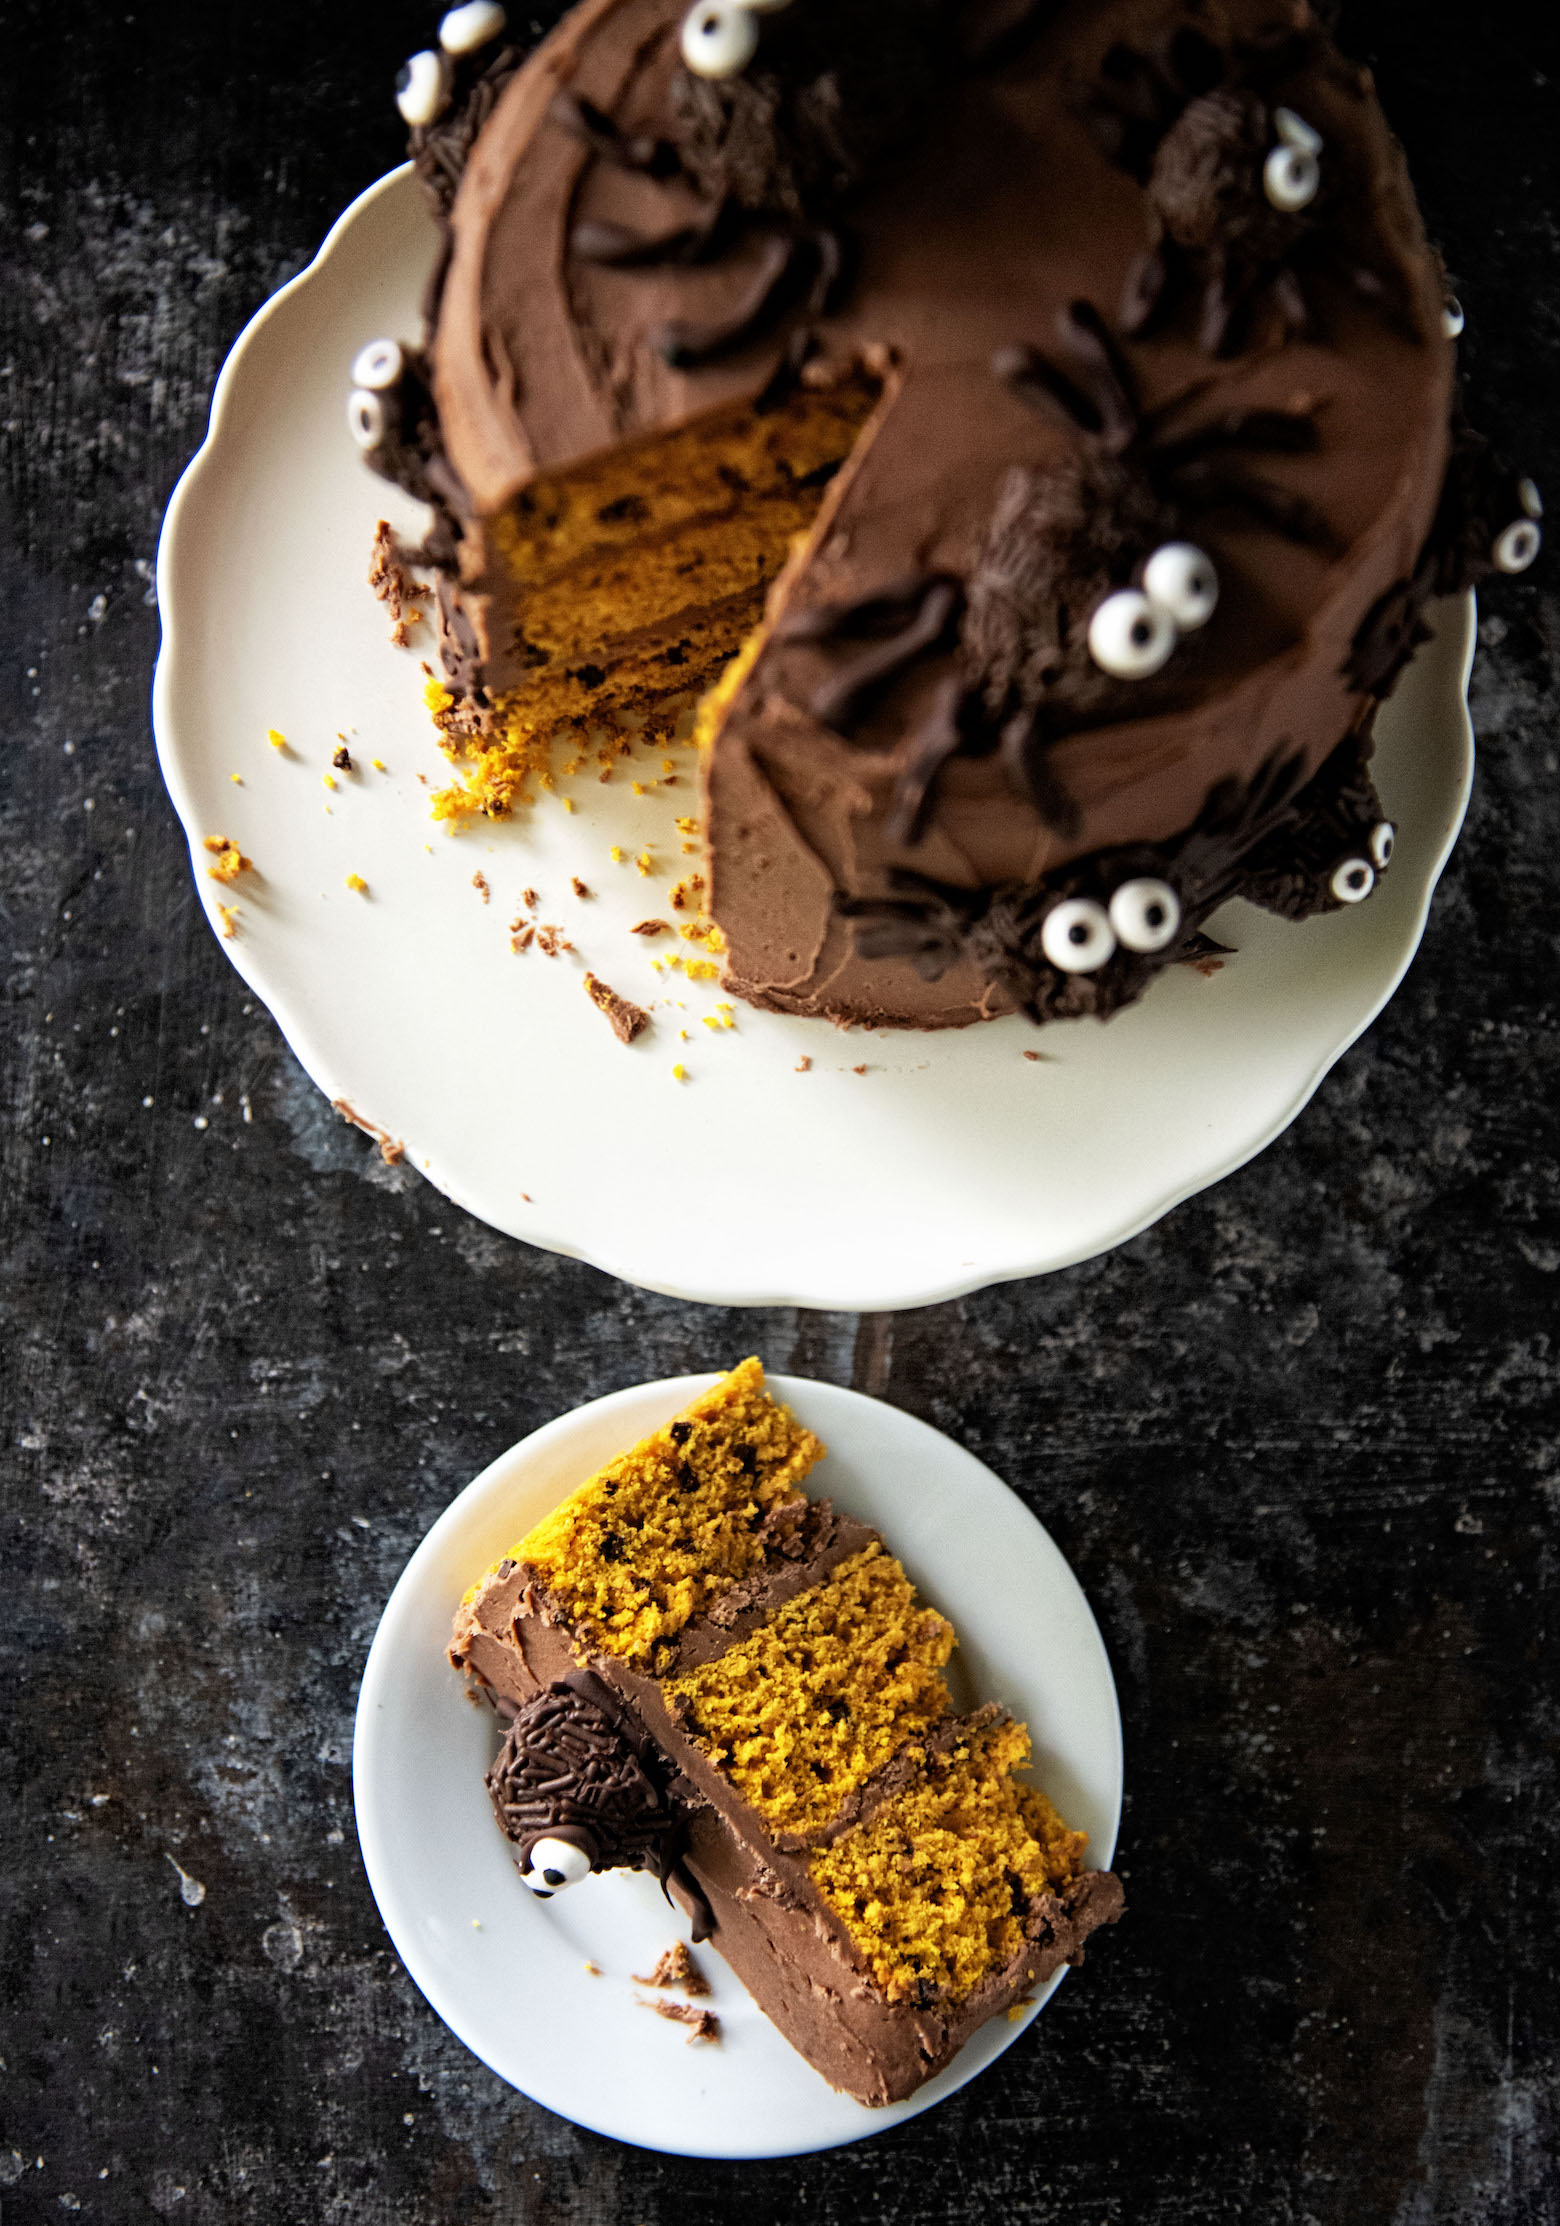 Chocolate Truffle Pumpkin Spider Cake 